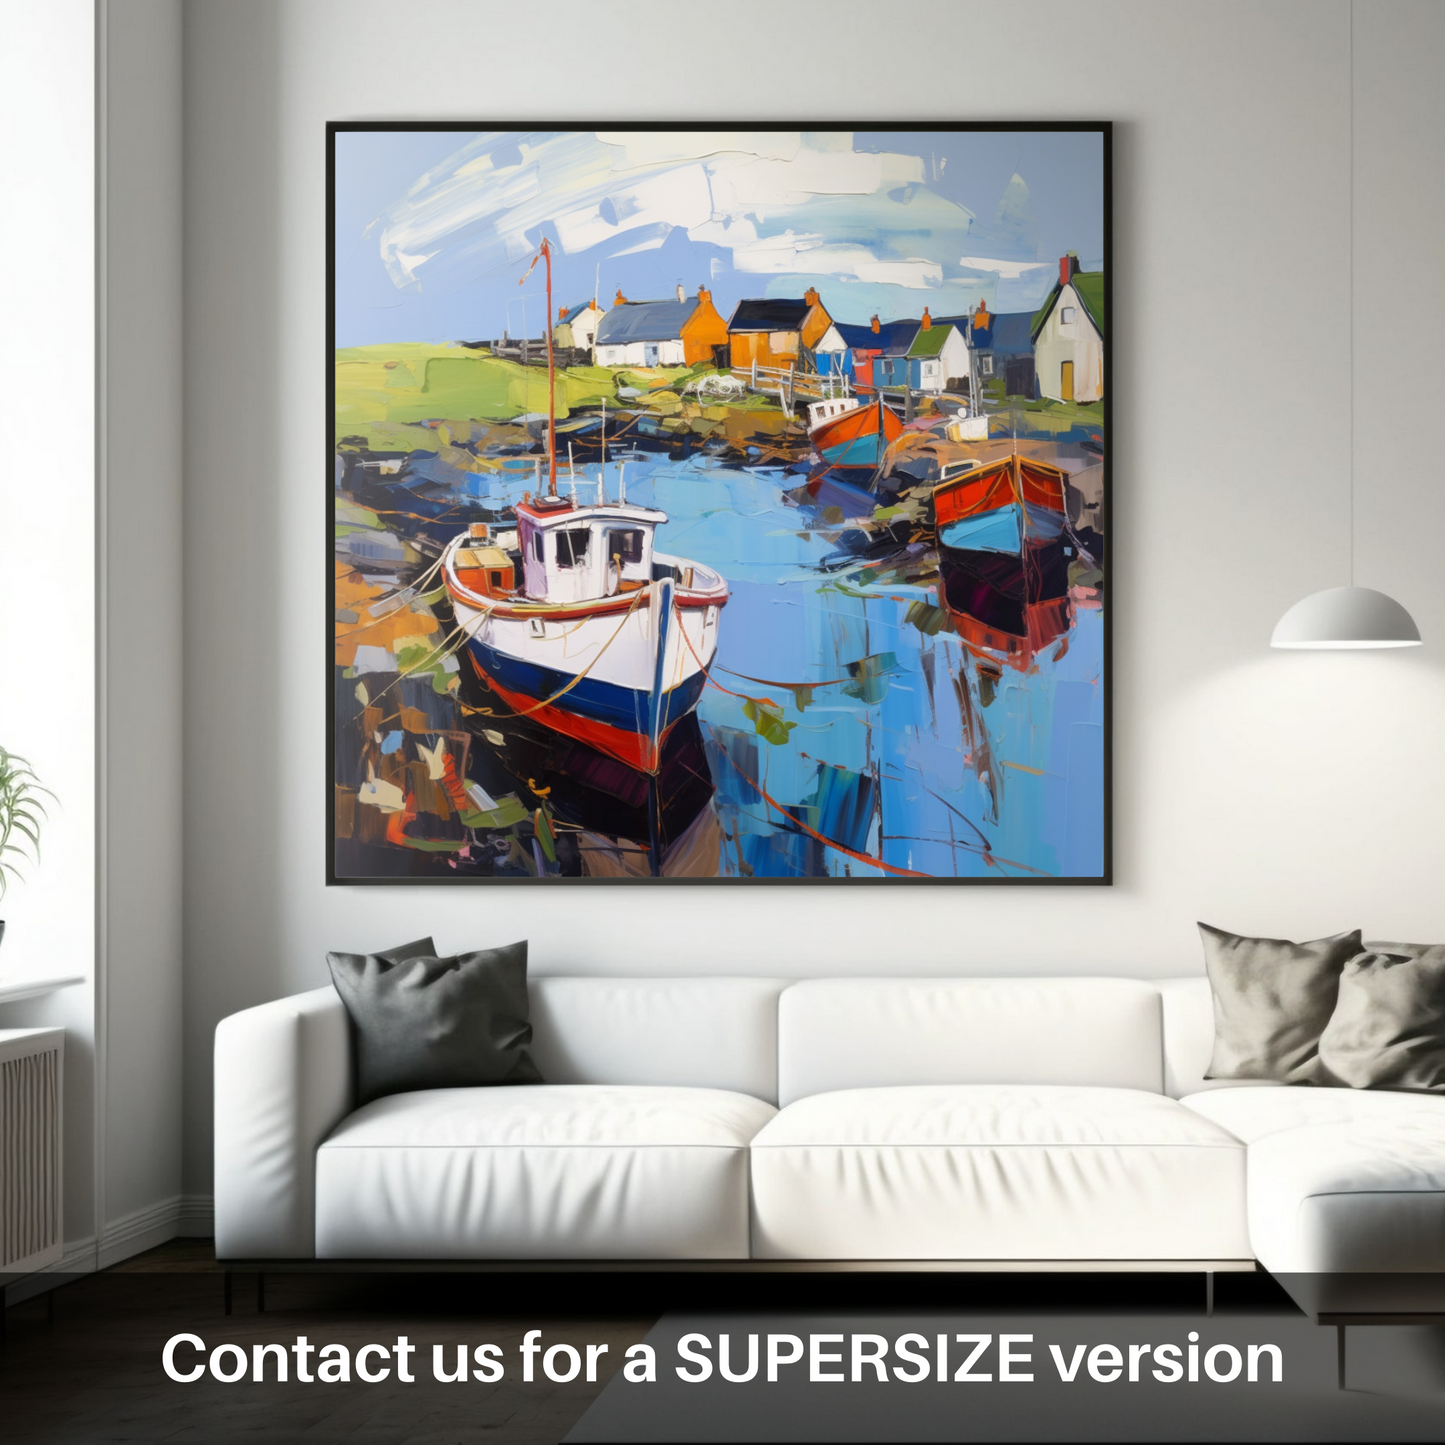 Huge supersize print of Lybster Harbour, Caithness